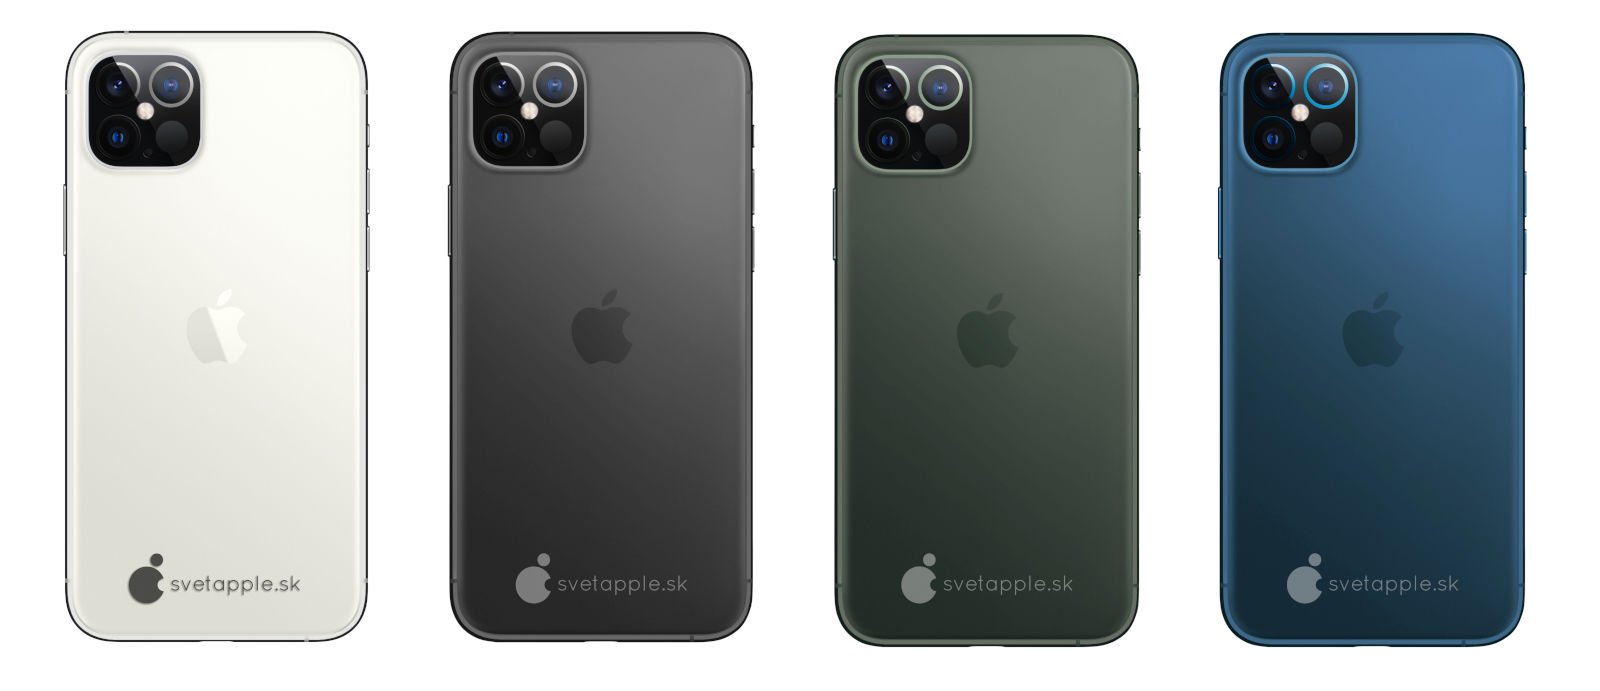 New iPhone 12 release date, price & specs: Svetapple renders